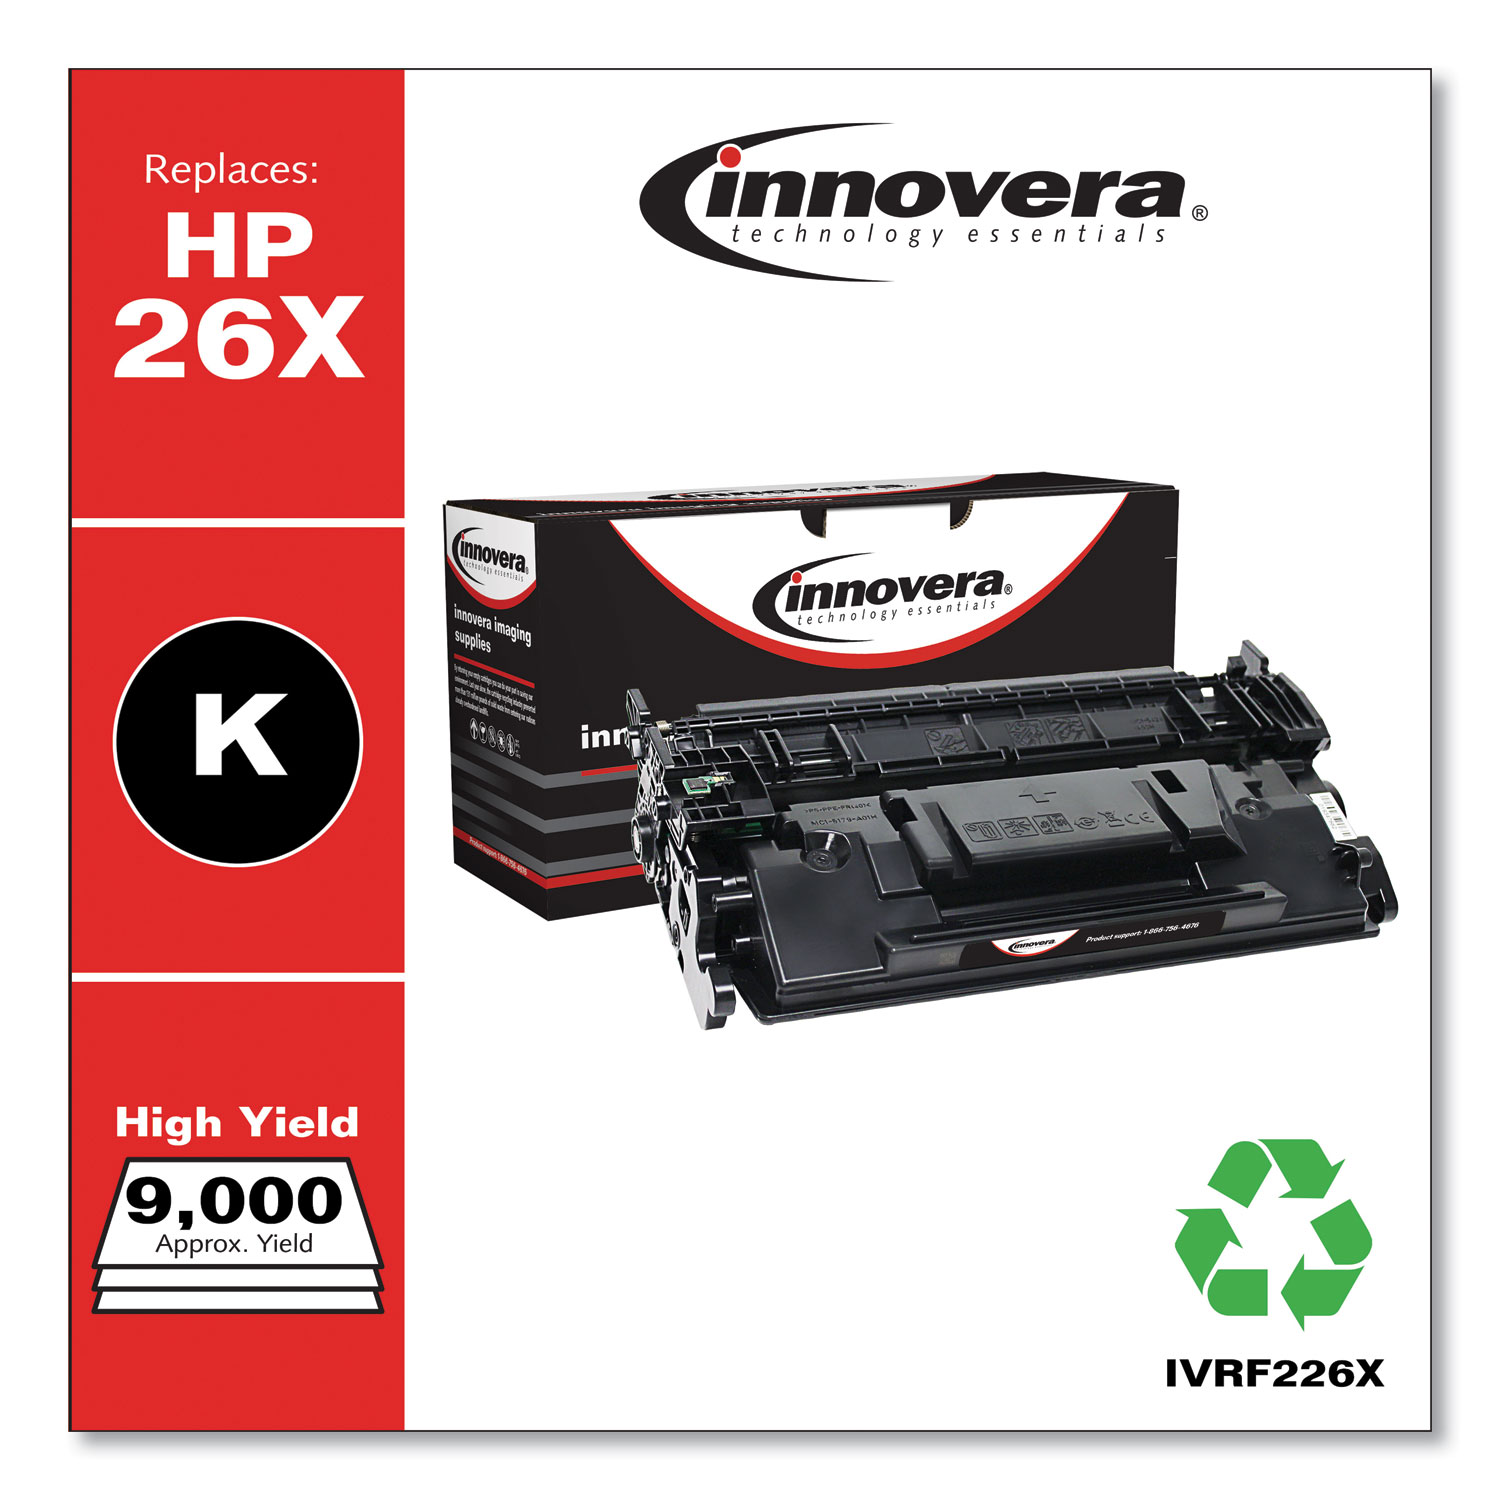  Innovera IVRF226X Remanufactured CF226X (26X) High-Yield Toner, 9000 Page-Yield, Black (IVRF226X) 